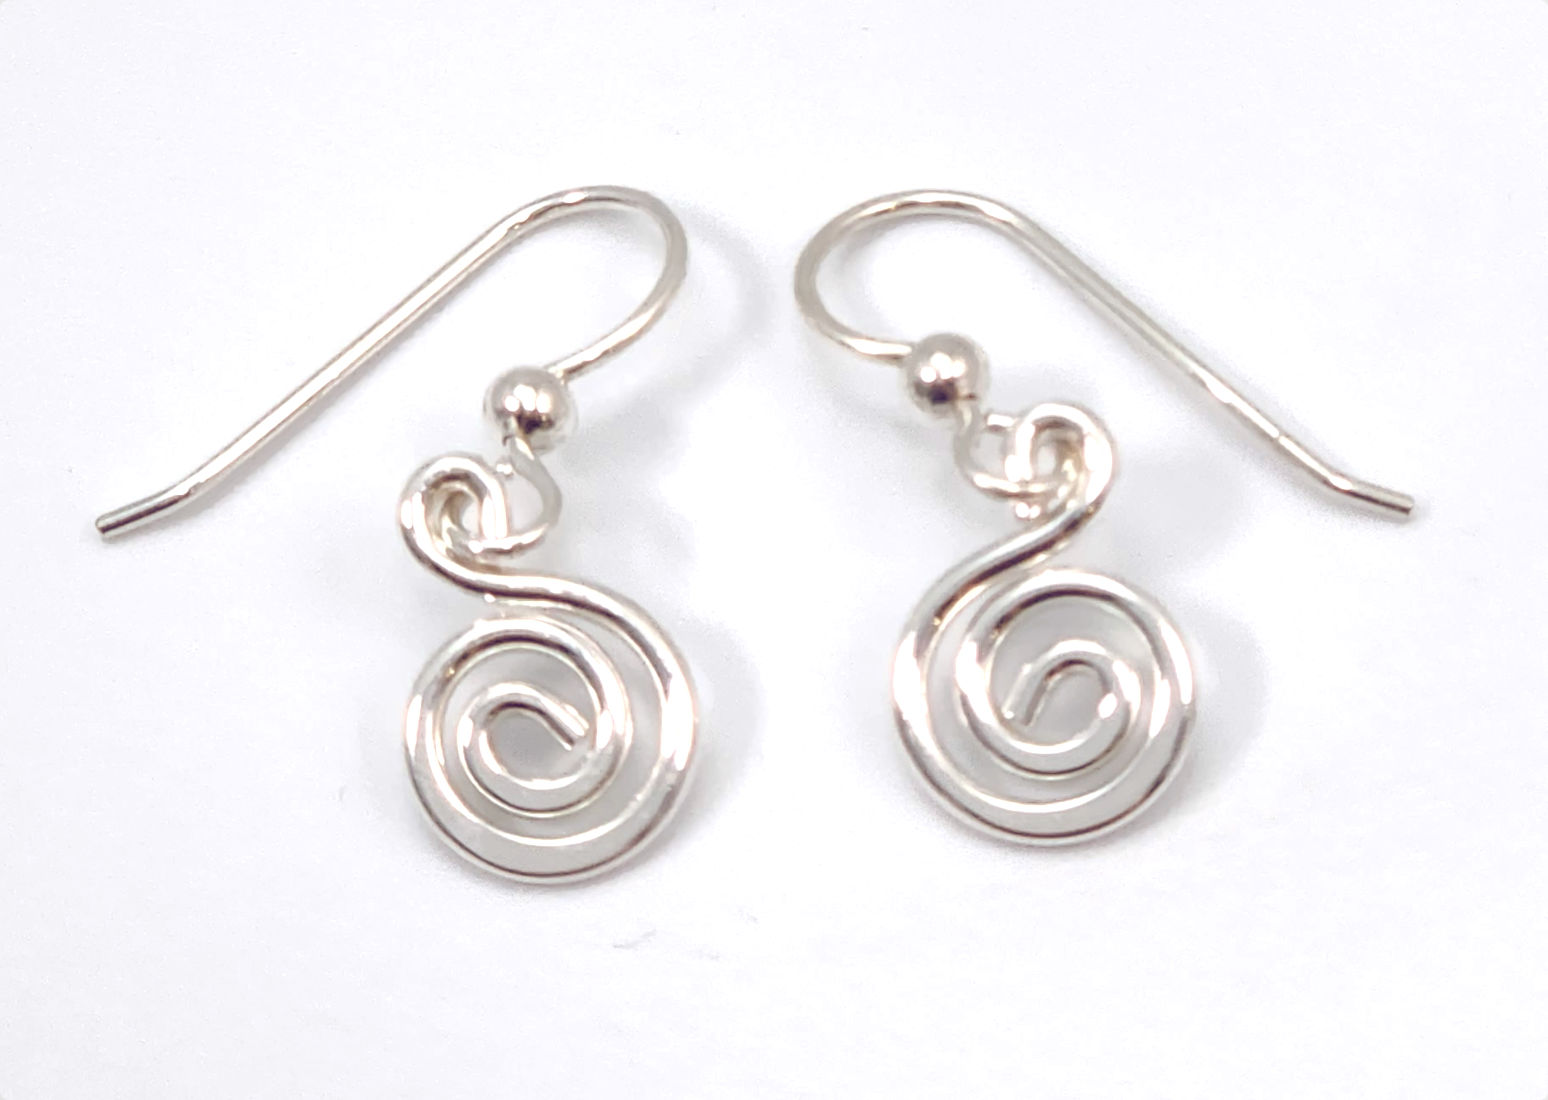 Spiral sterling silver handmade earrings by Ted Walker